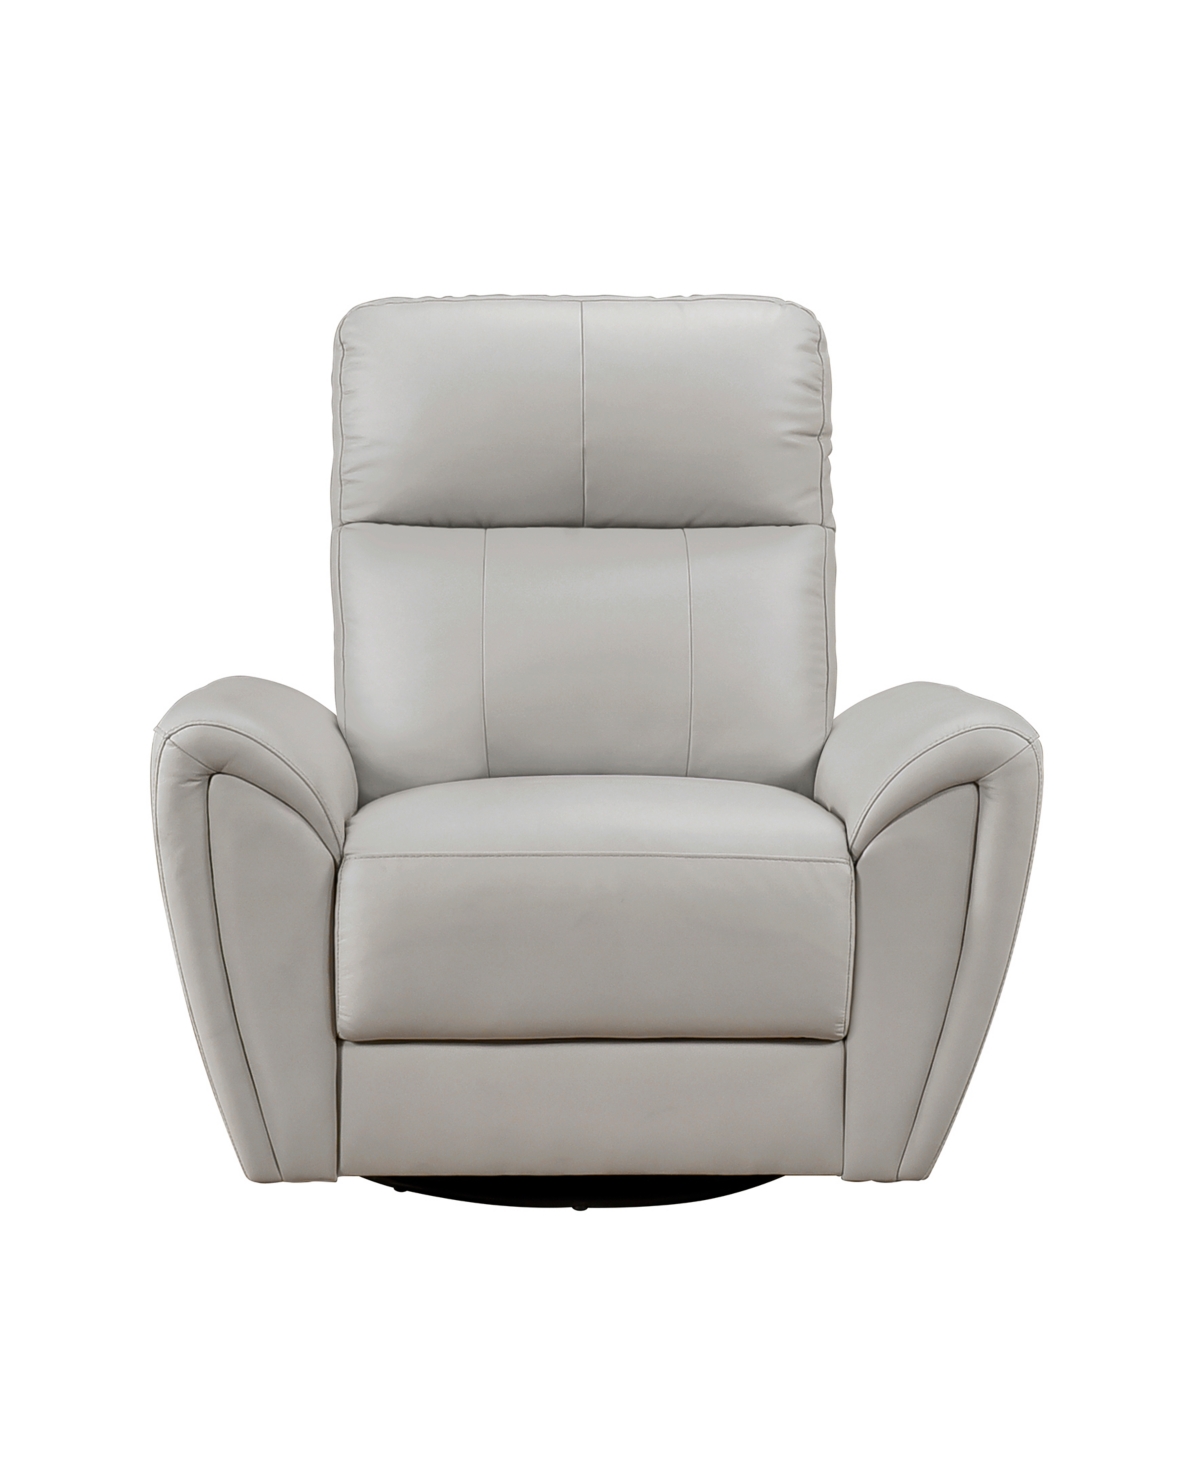 Homelegance White Label Brennen 39" Leather Match Swivel Glider Chair In Gray